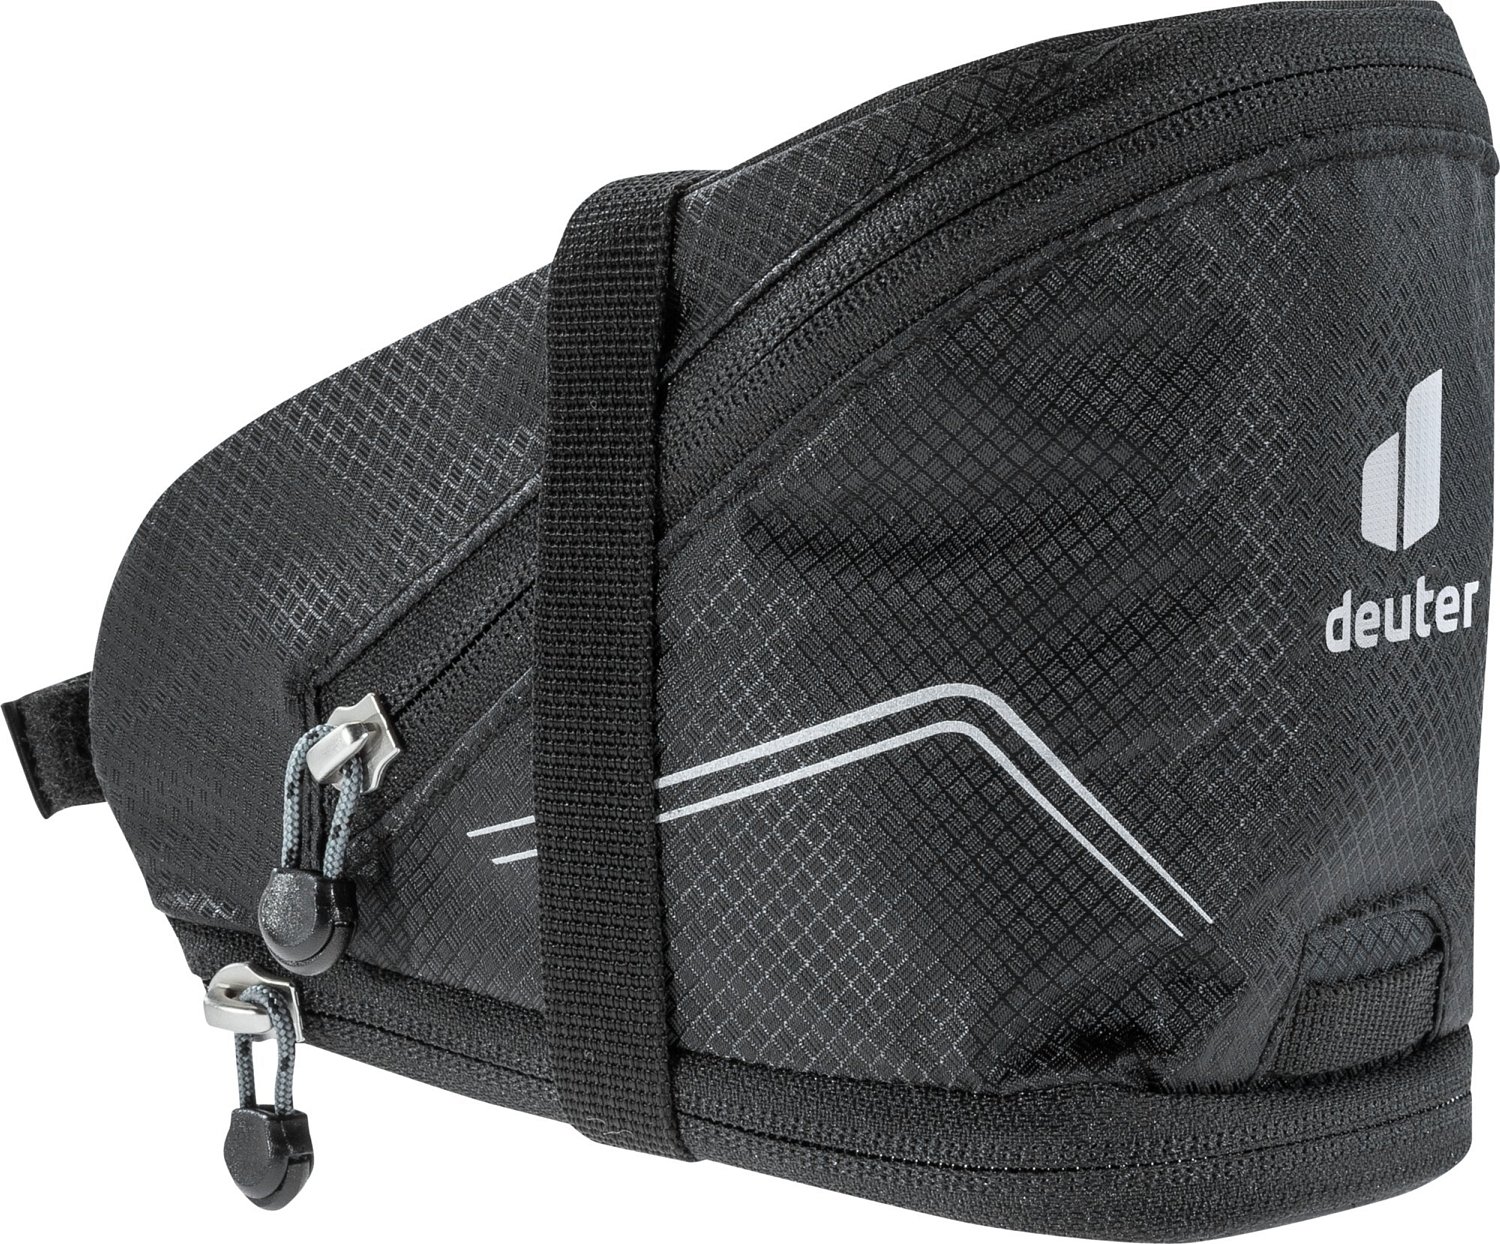 Велосумка Deuter Bike Bag II, под седло, 1.1 л, Black, 2021, 3291121_7000 грипсы велосипедные bbb 2021 mamba deluxe 130mm black bhg 106